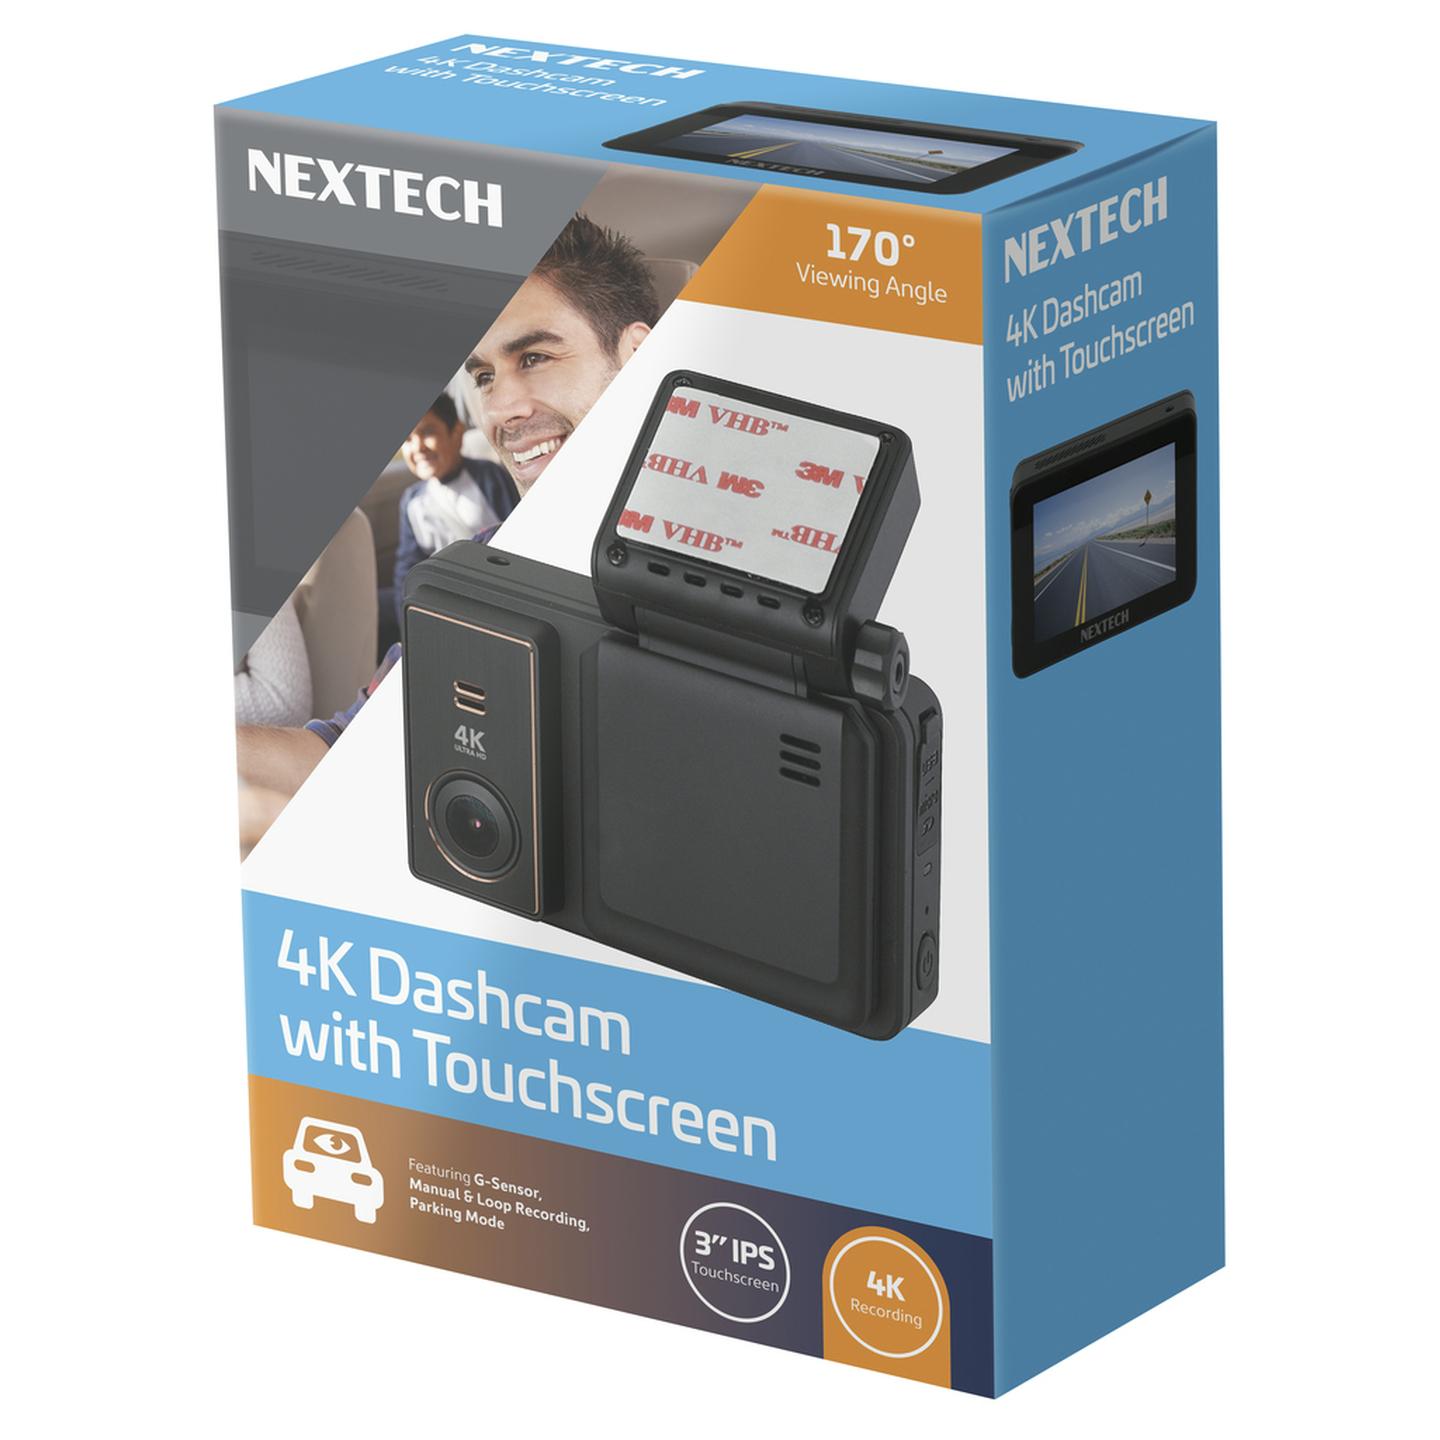 4K Dashcam with Touchscreen